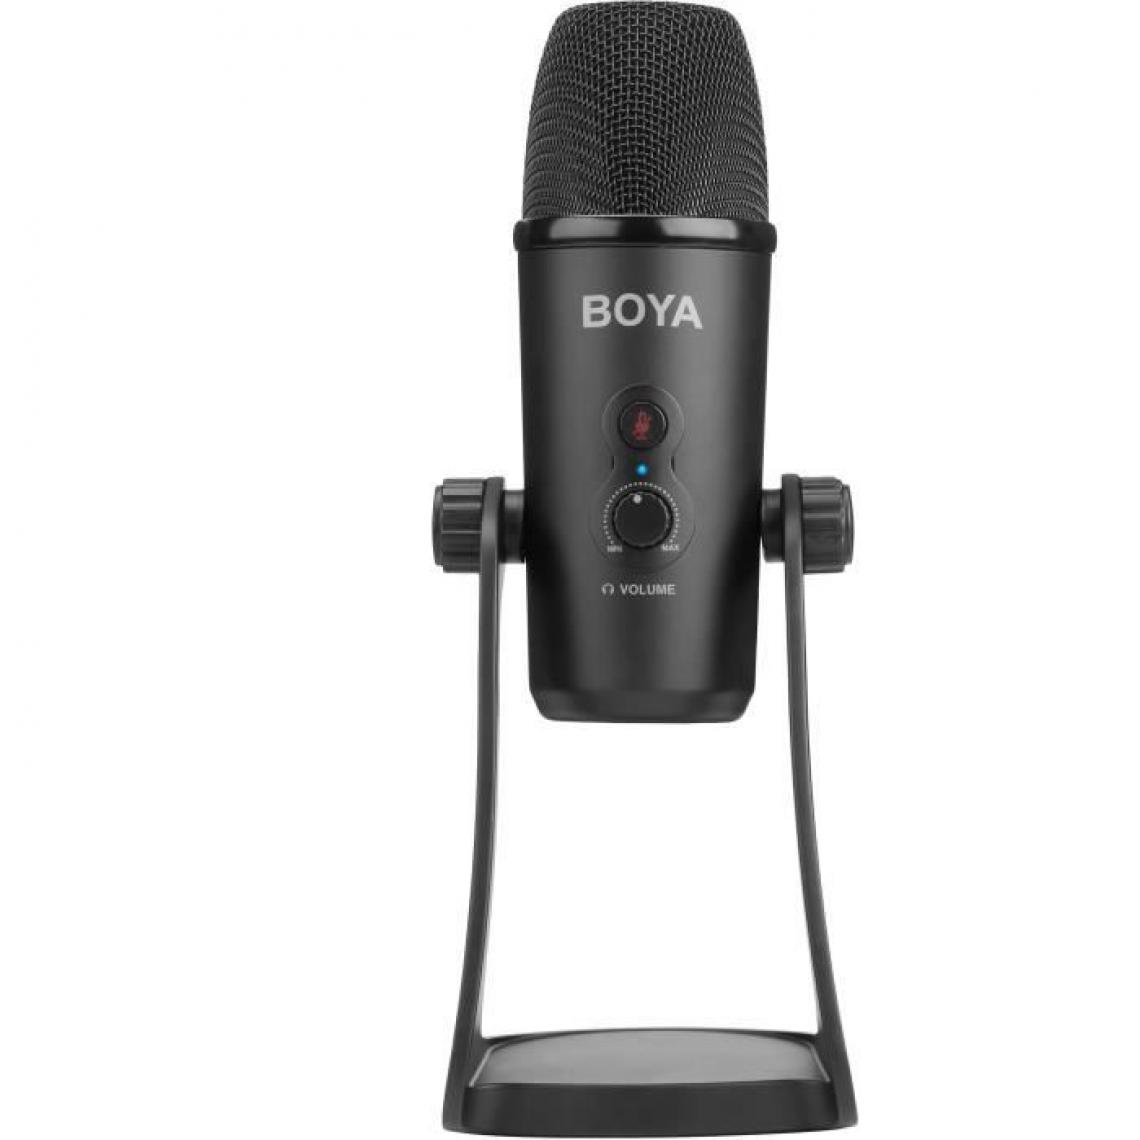 Boya - BOYA PM700 Microphone de studio - Cable micro et USB - Compatible Windows et Mac - Micros studio